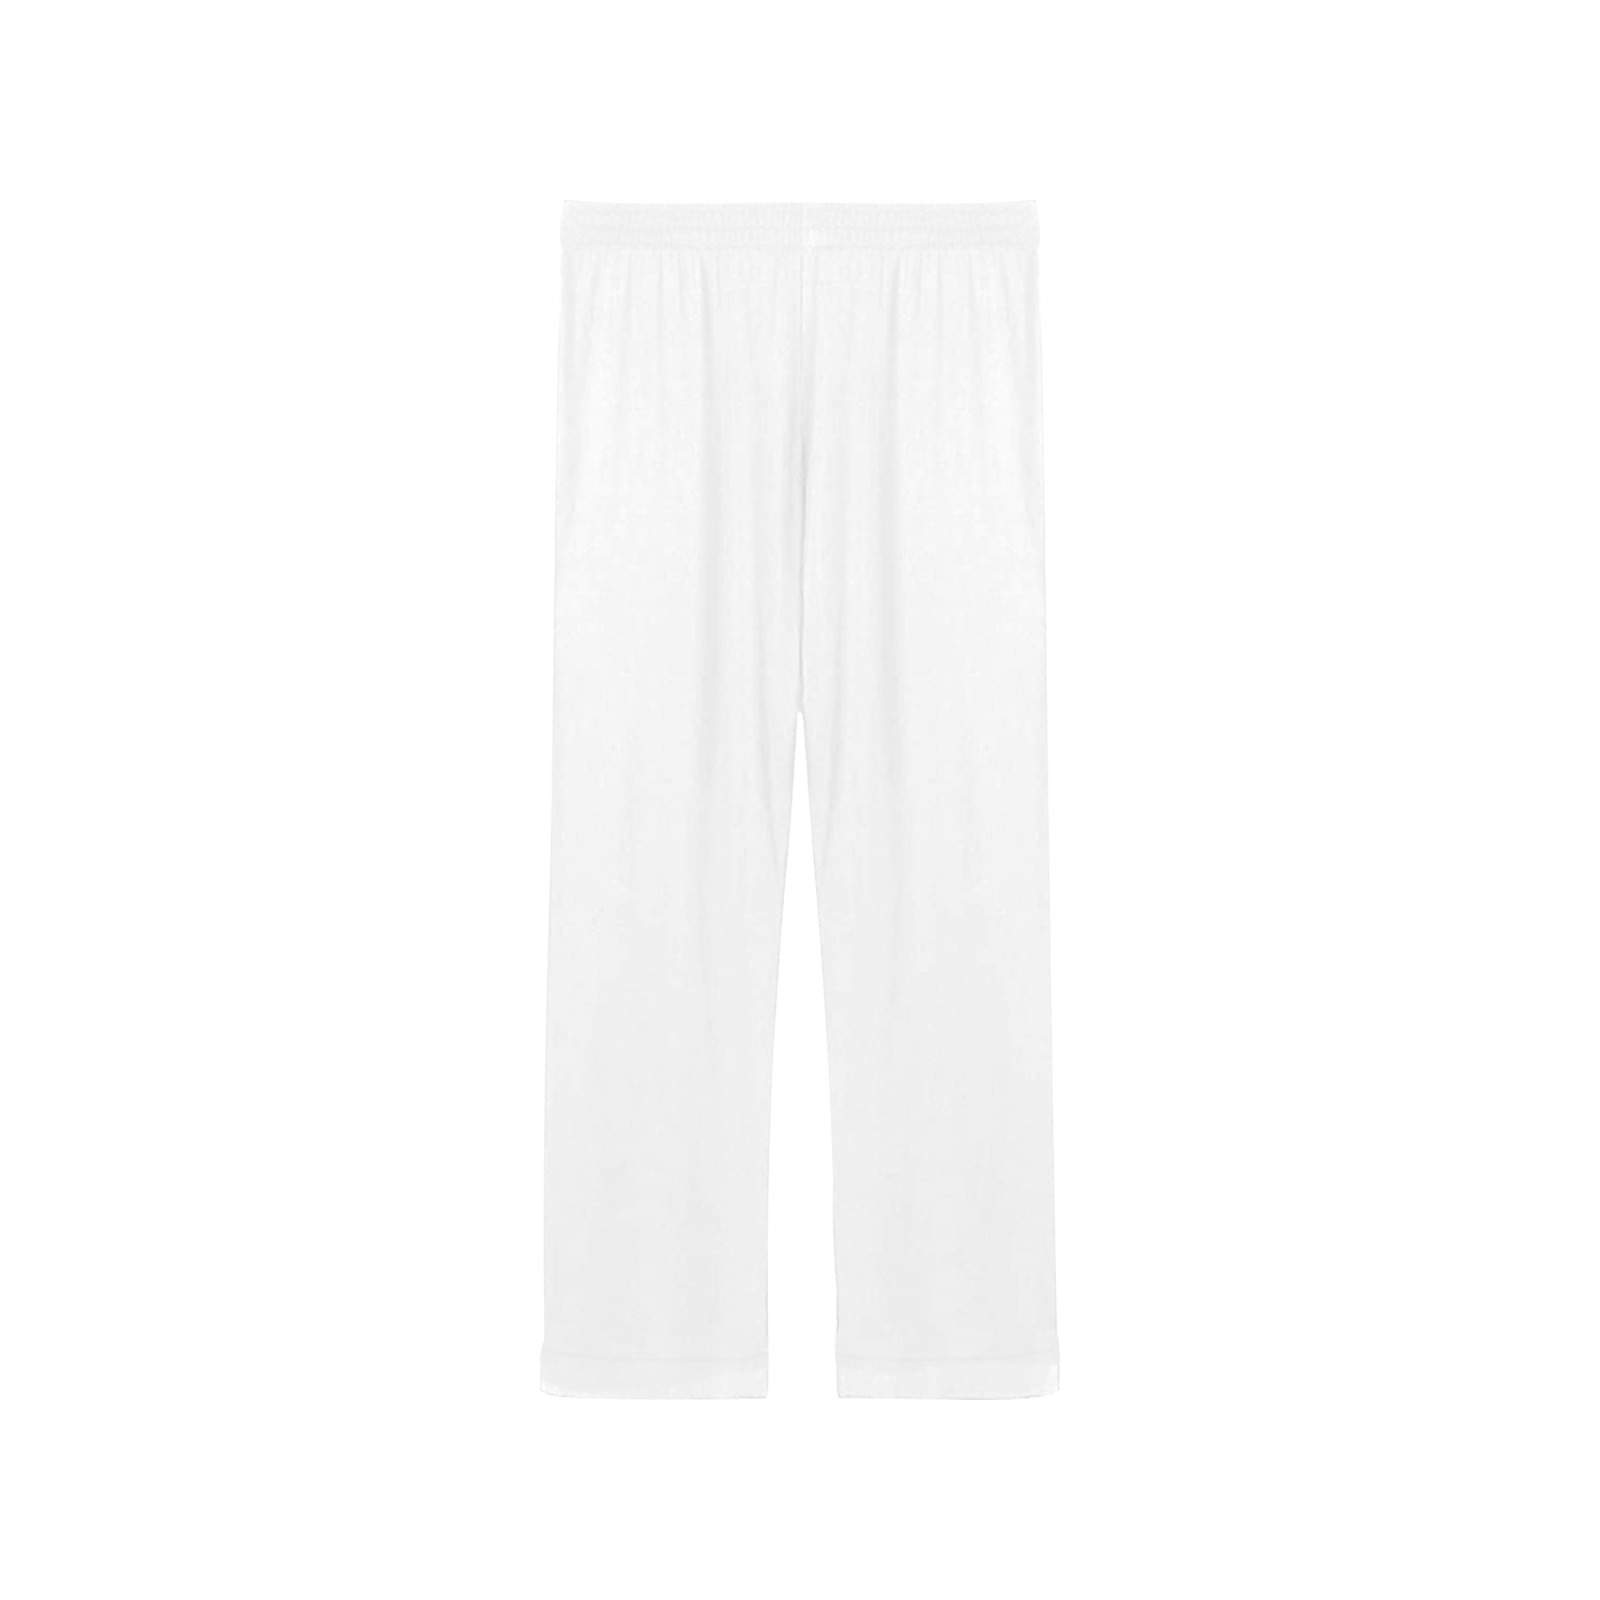 color white Women's Pajama Trousers